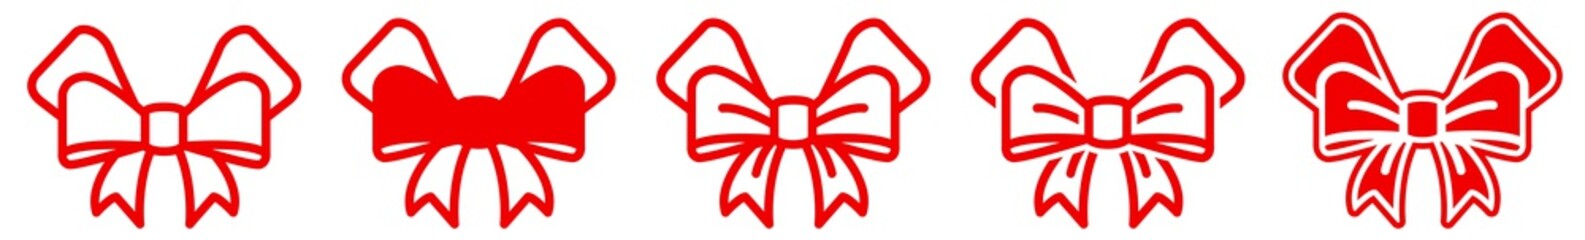 Bow Ribbon Icon Red | Wedding Ribbons Illustration | Birthday Gift Symbol | Christmas Bows Logo | Valentine's Day Sign | Isolated | Variations